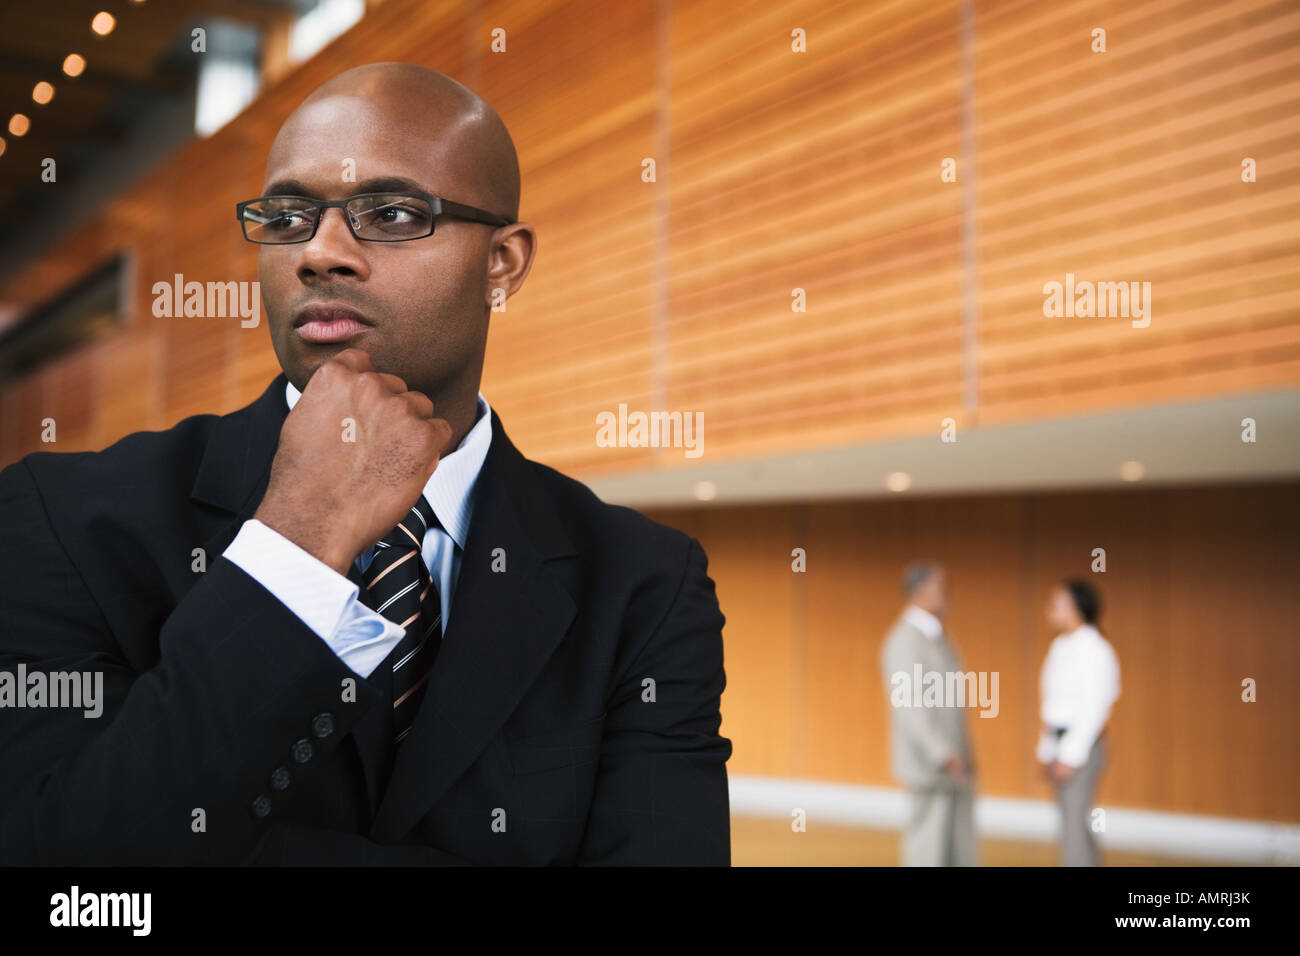 African businessman wearing eyeglasses Stock Photo